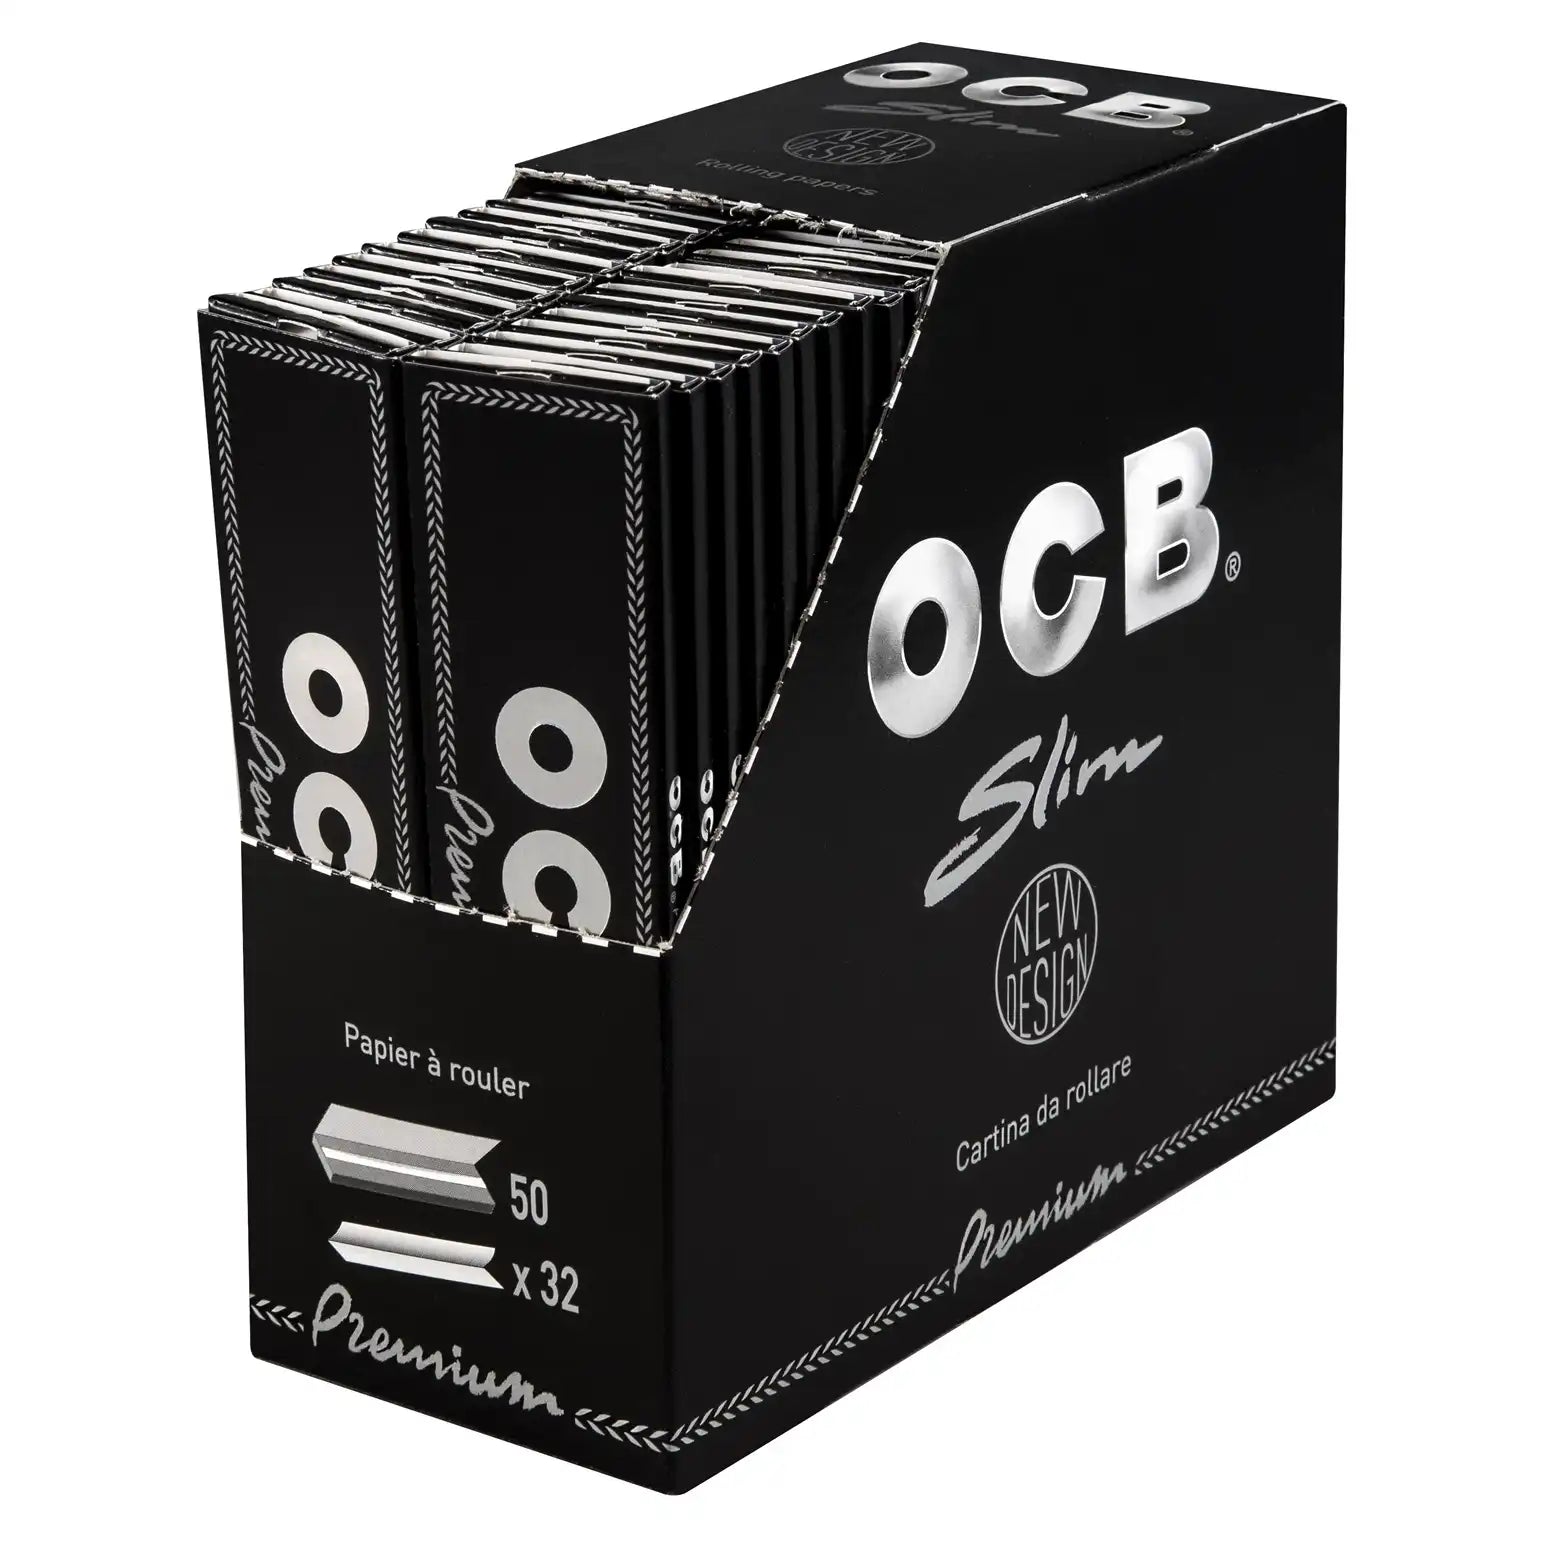 OCB Black Slim Verpackungseinheit